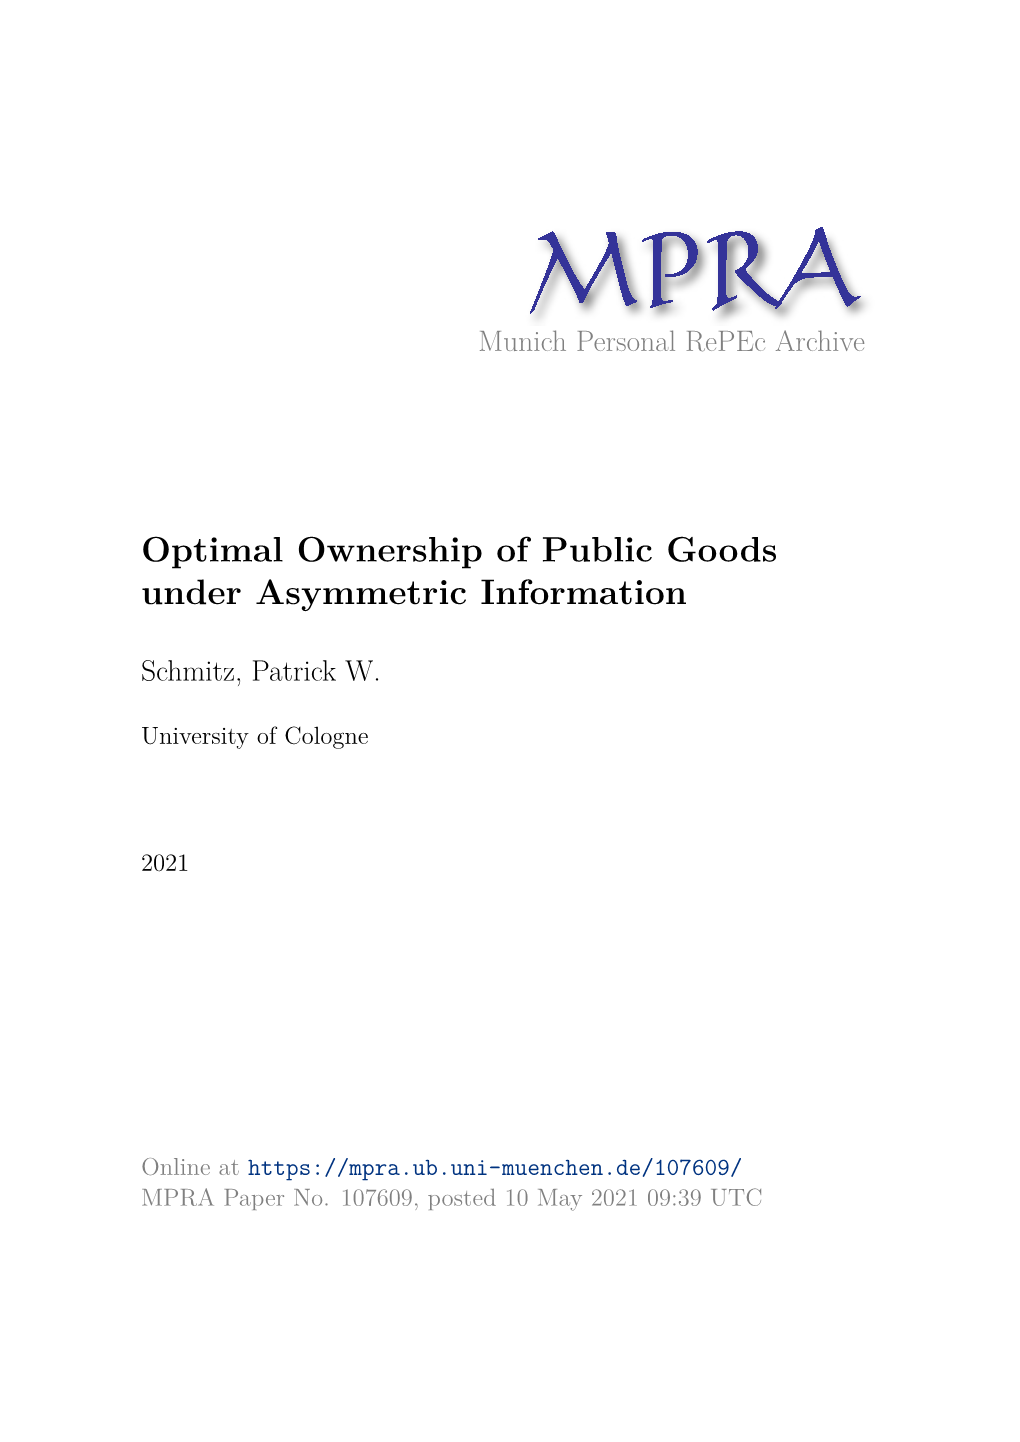 Optimal Ownership of Public Goods Under Asymmetric Information